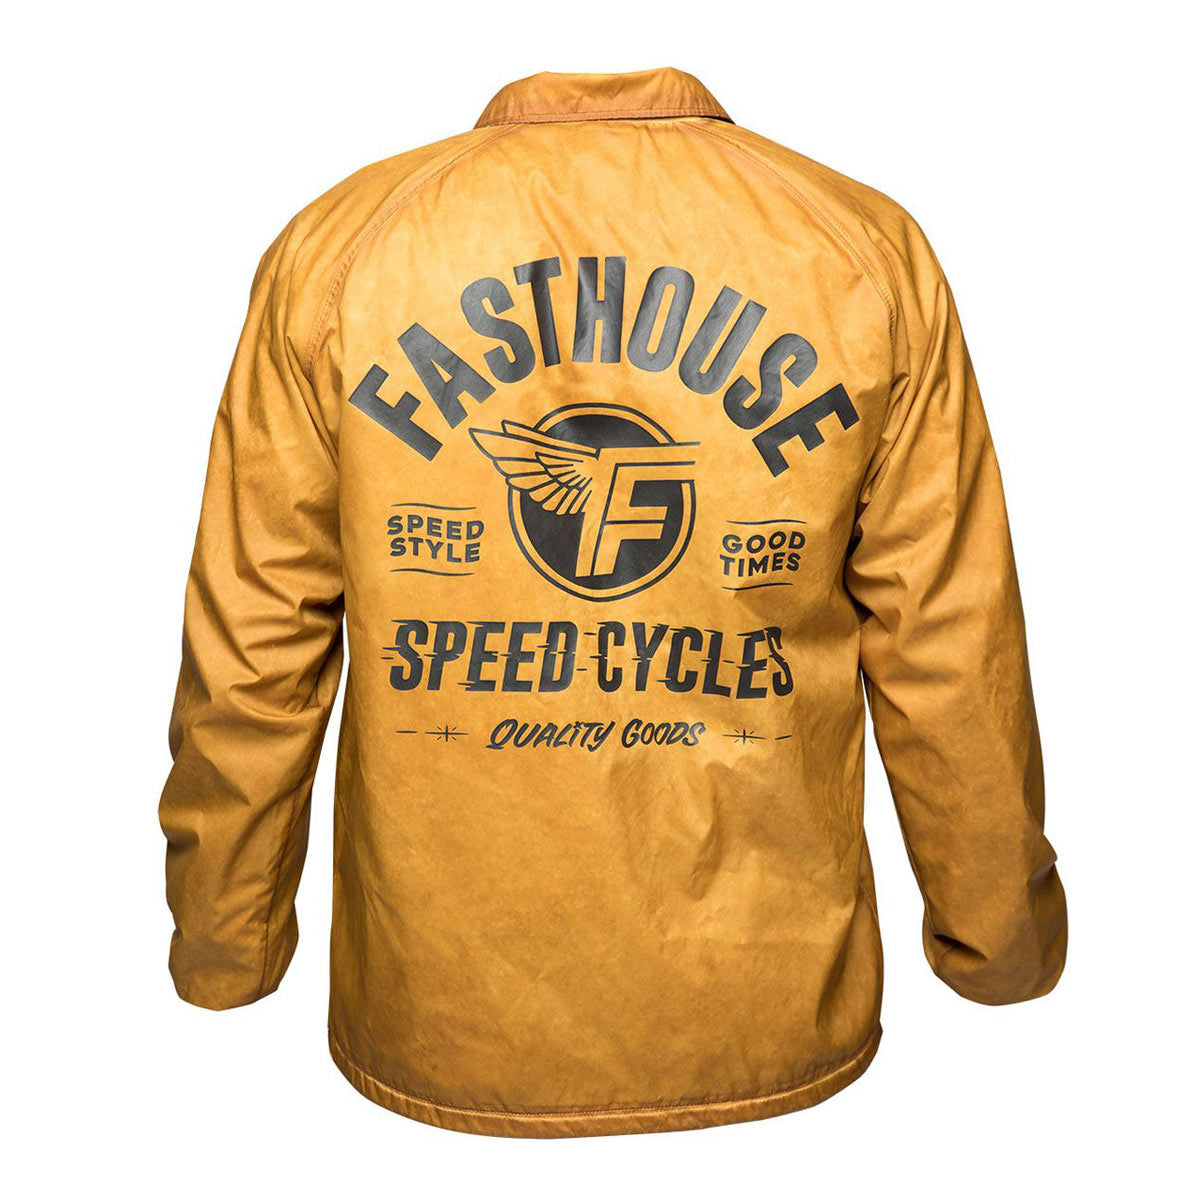 Fasthouse - Malen Jacket - Vintage Gold